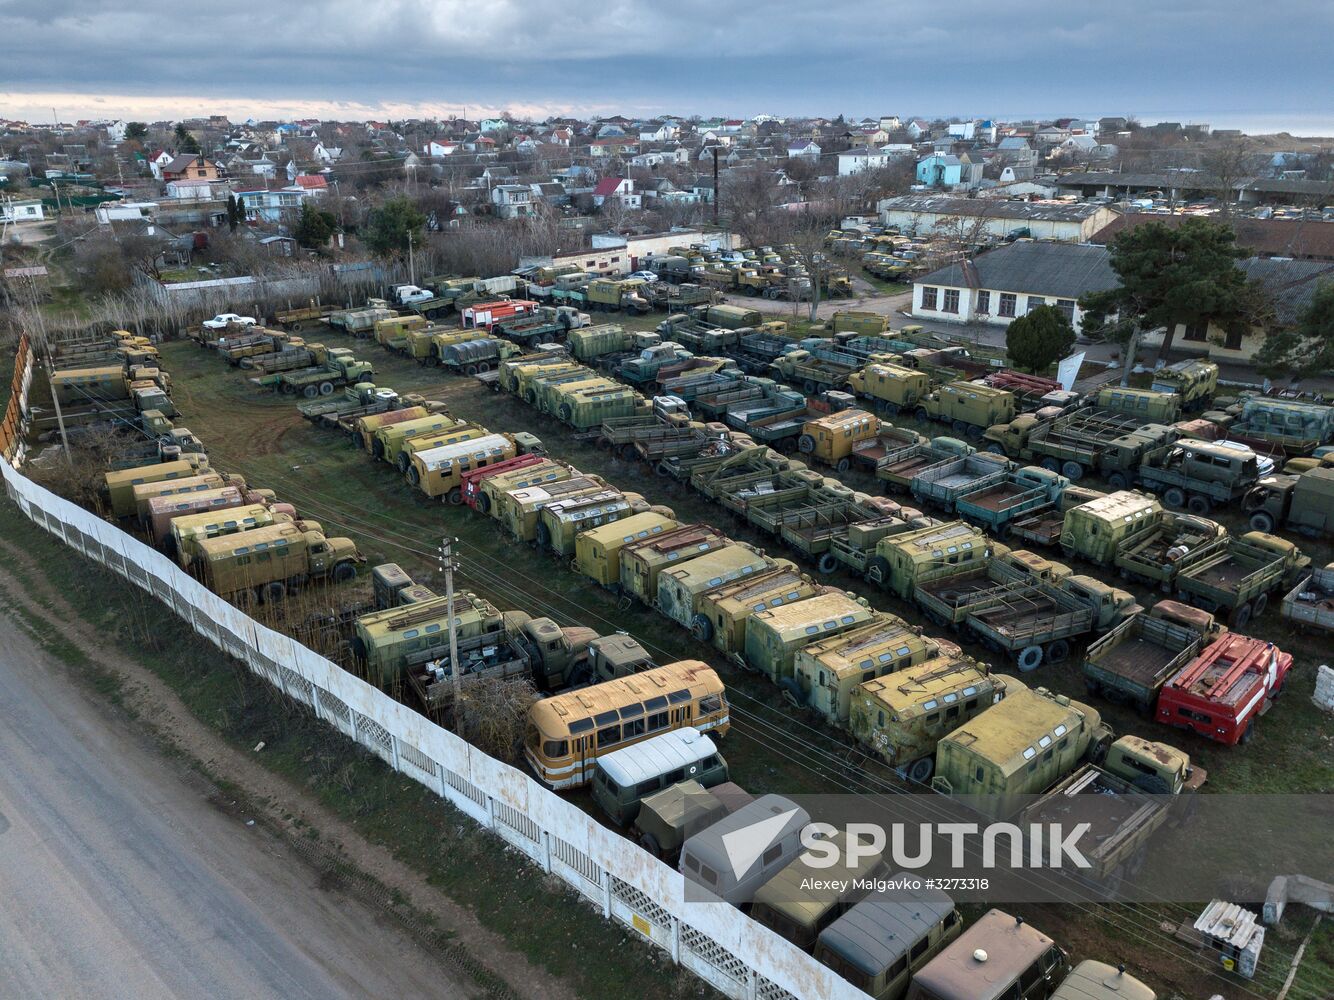 Ukraine-owned military equipment in Crimea